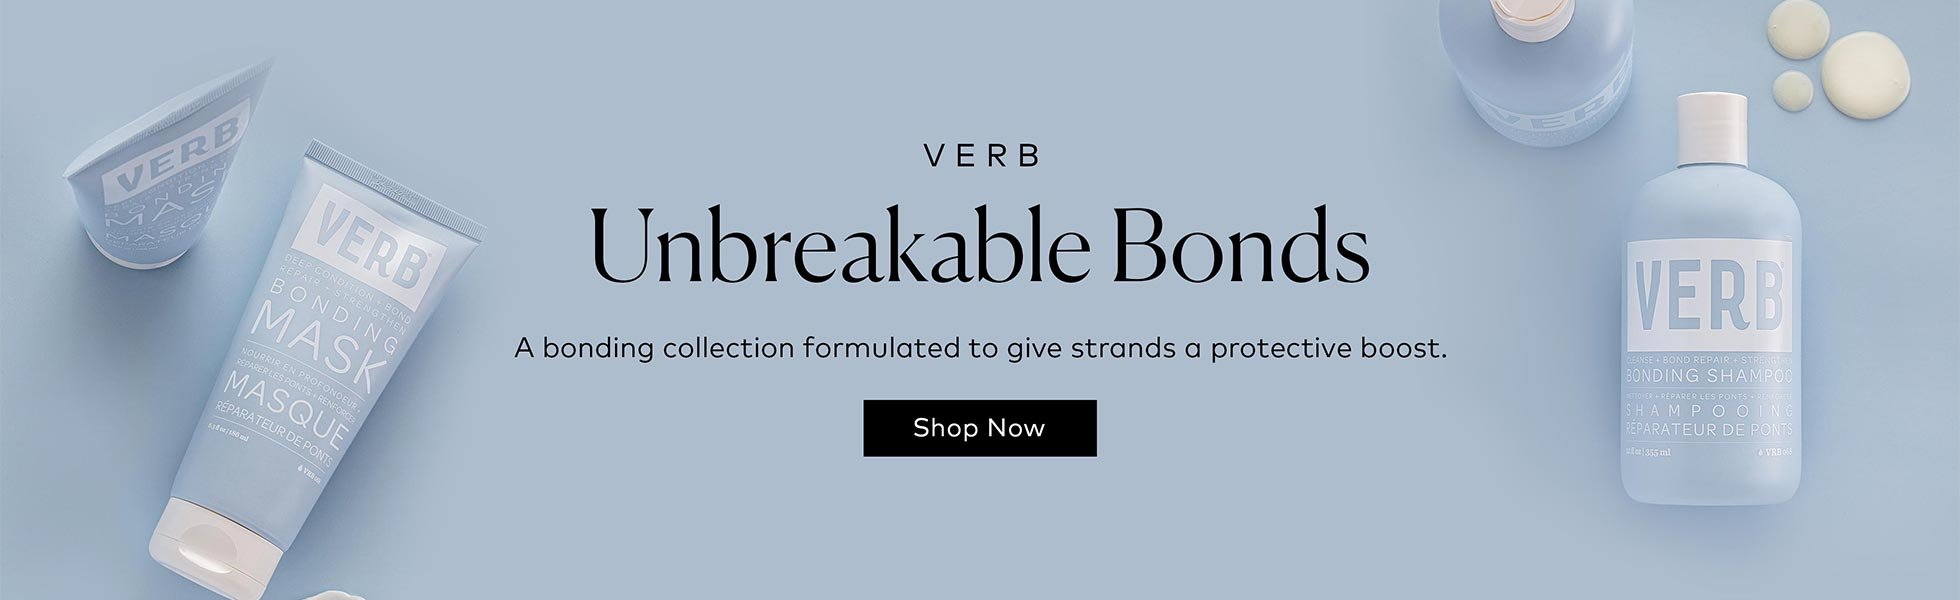 Shop the Verb Bonding Collection at Beautylish.com